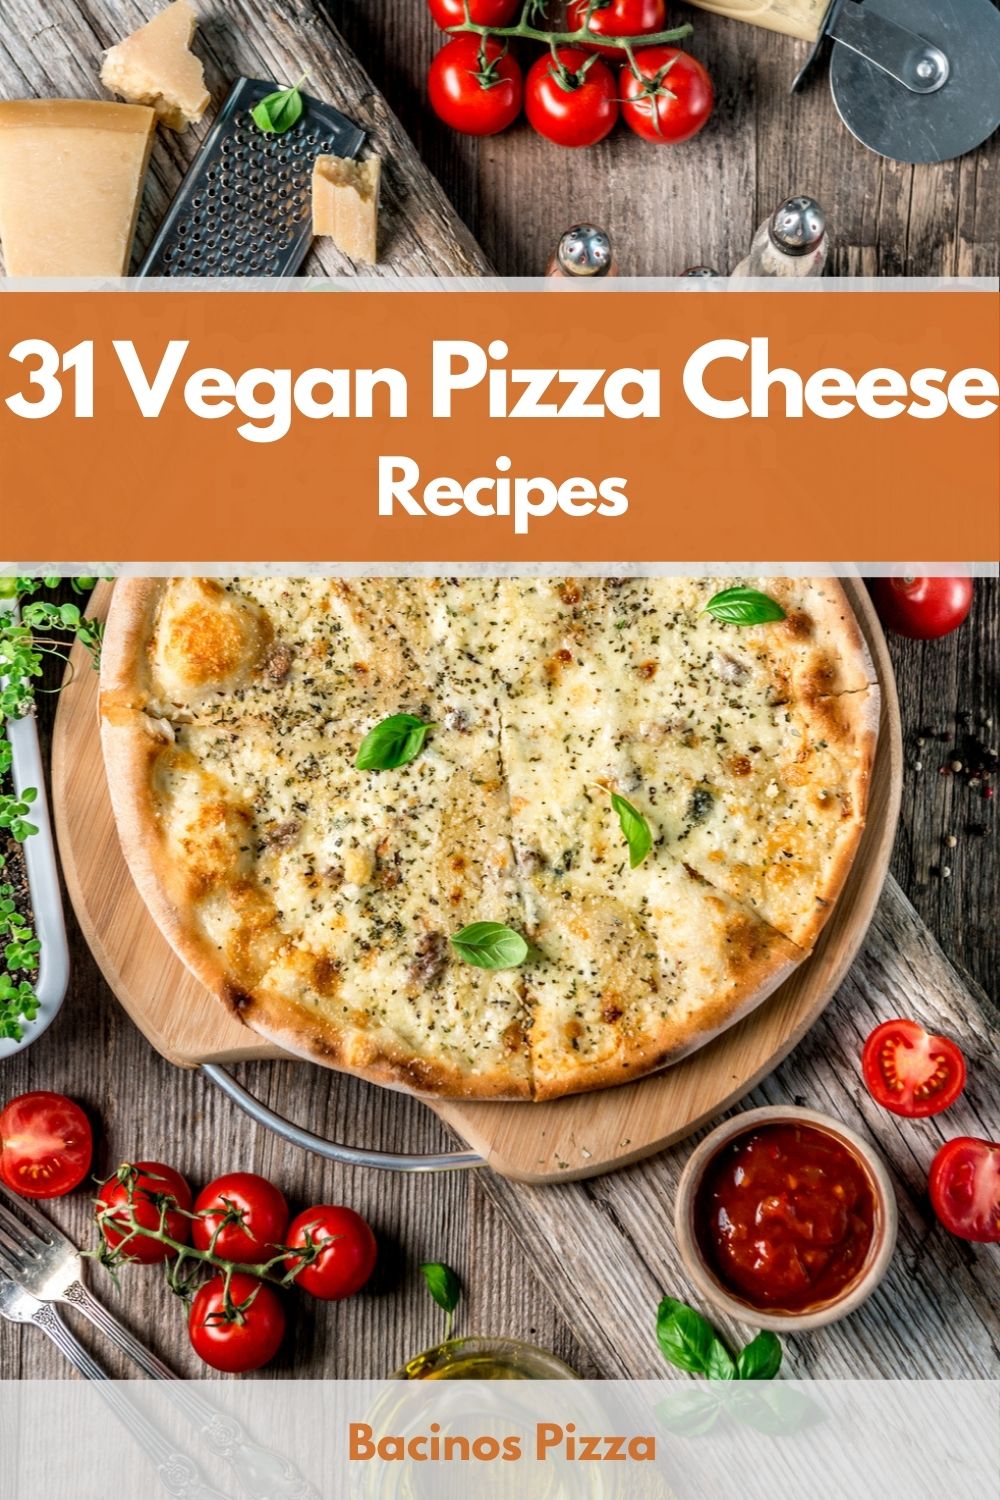 31 Vegan Pizza Cheese Recipes pin